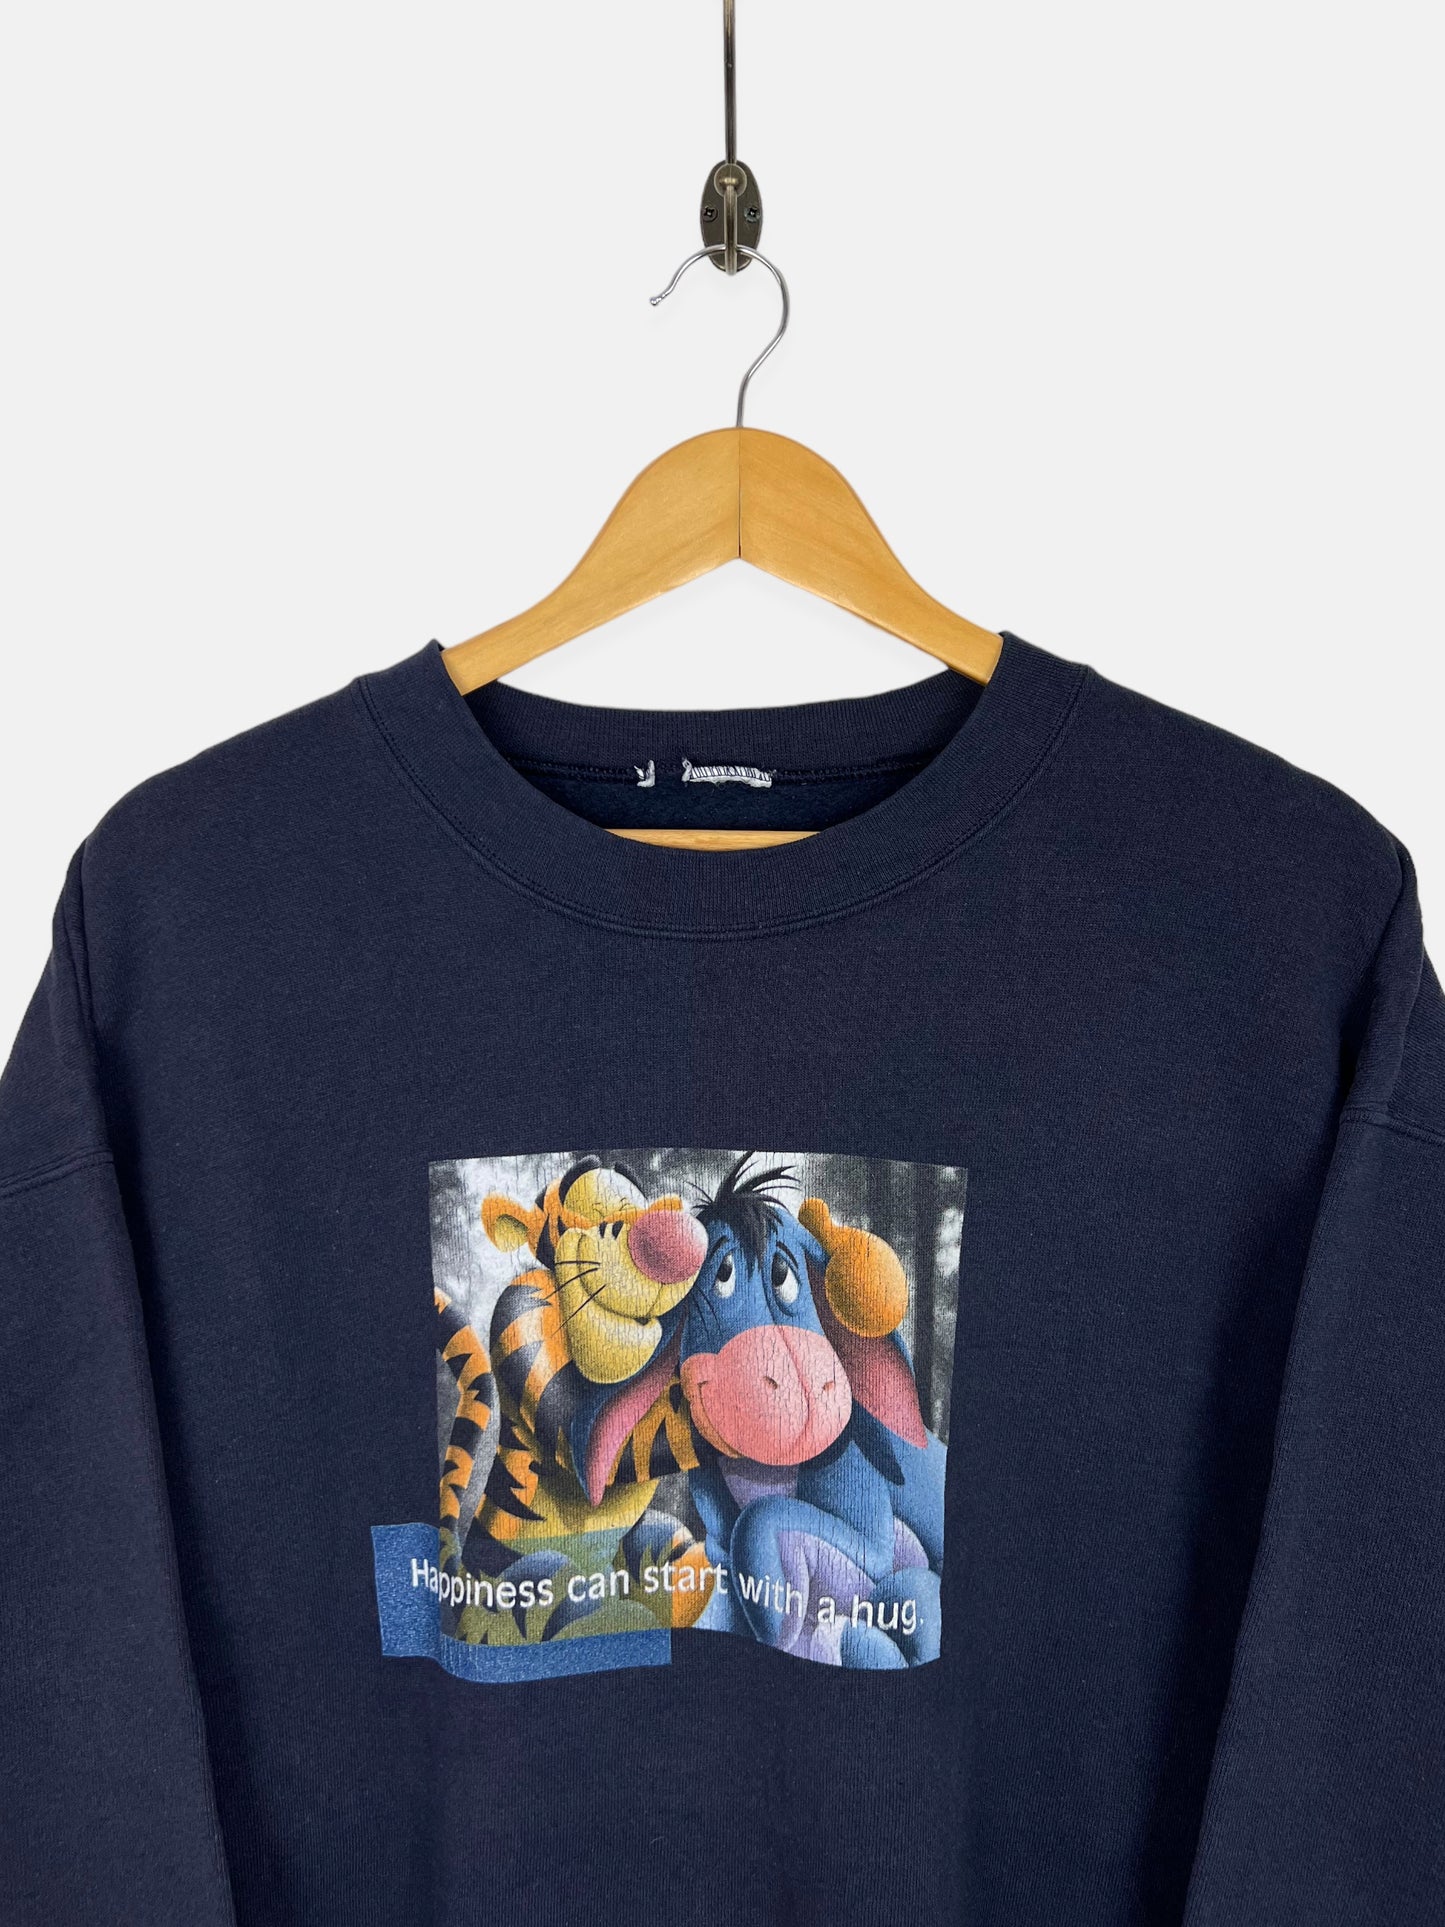 90's Disney Tigger & Eeyore Vintage Sweatshirt Size L